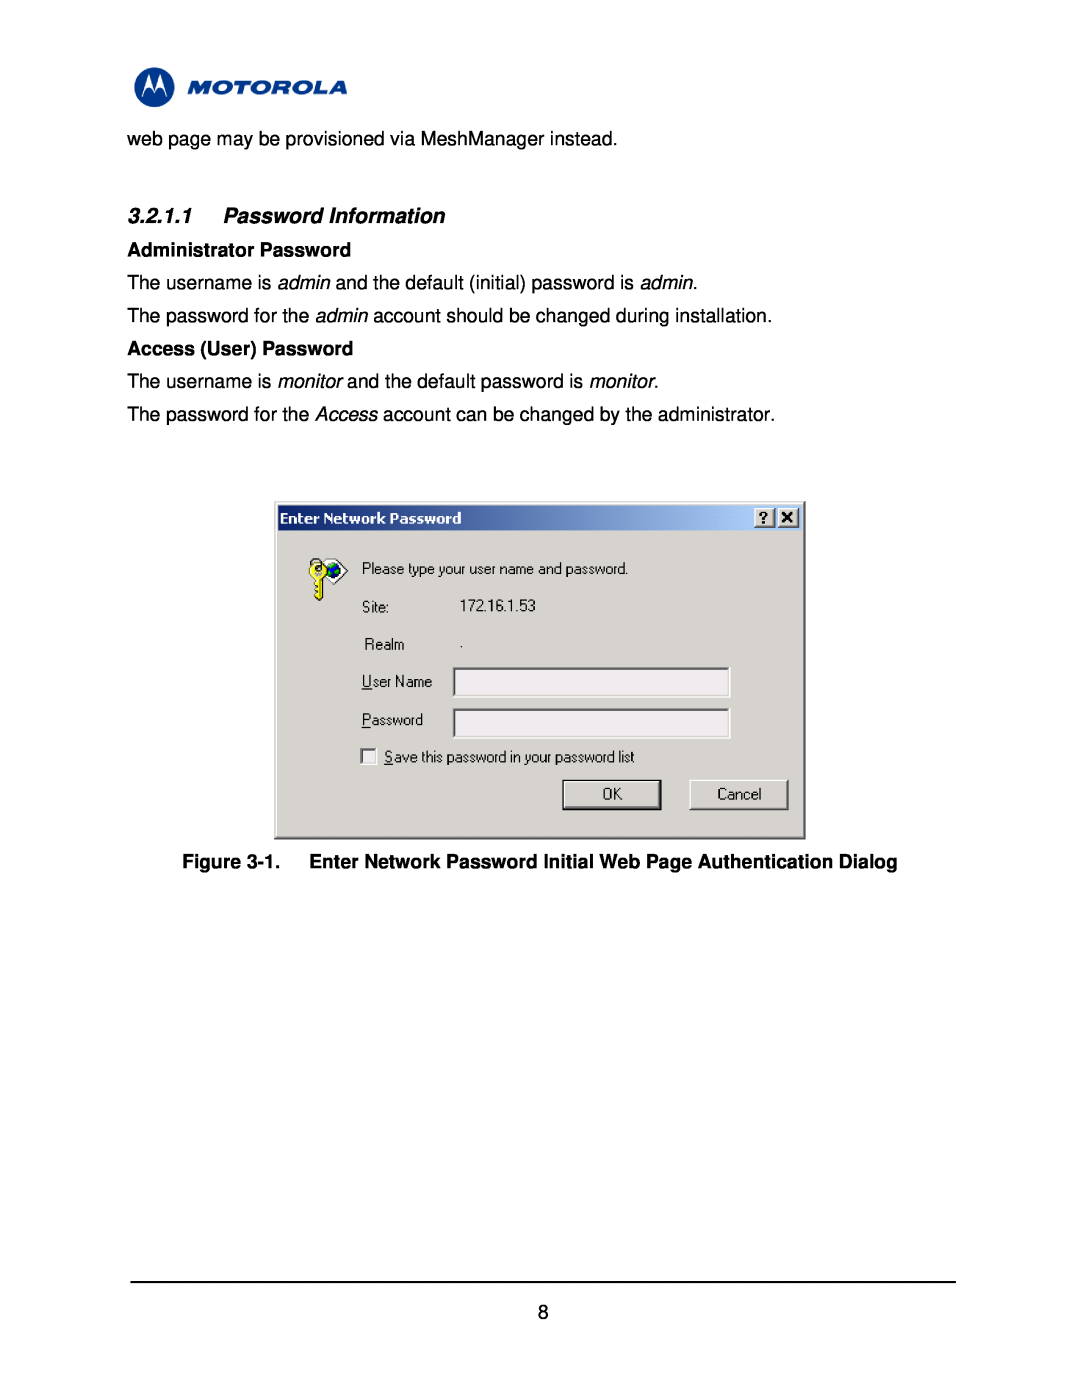 Motorola 3.1 manual Password Information, Administrator Password, Access User Password 